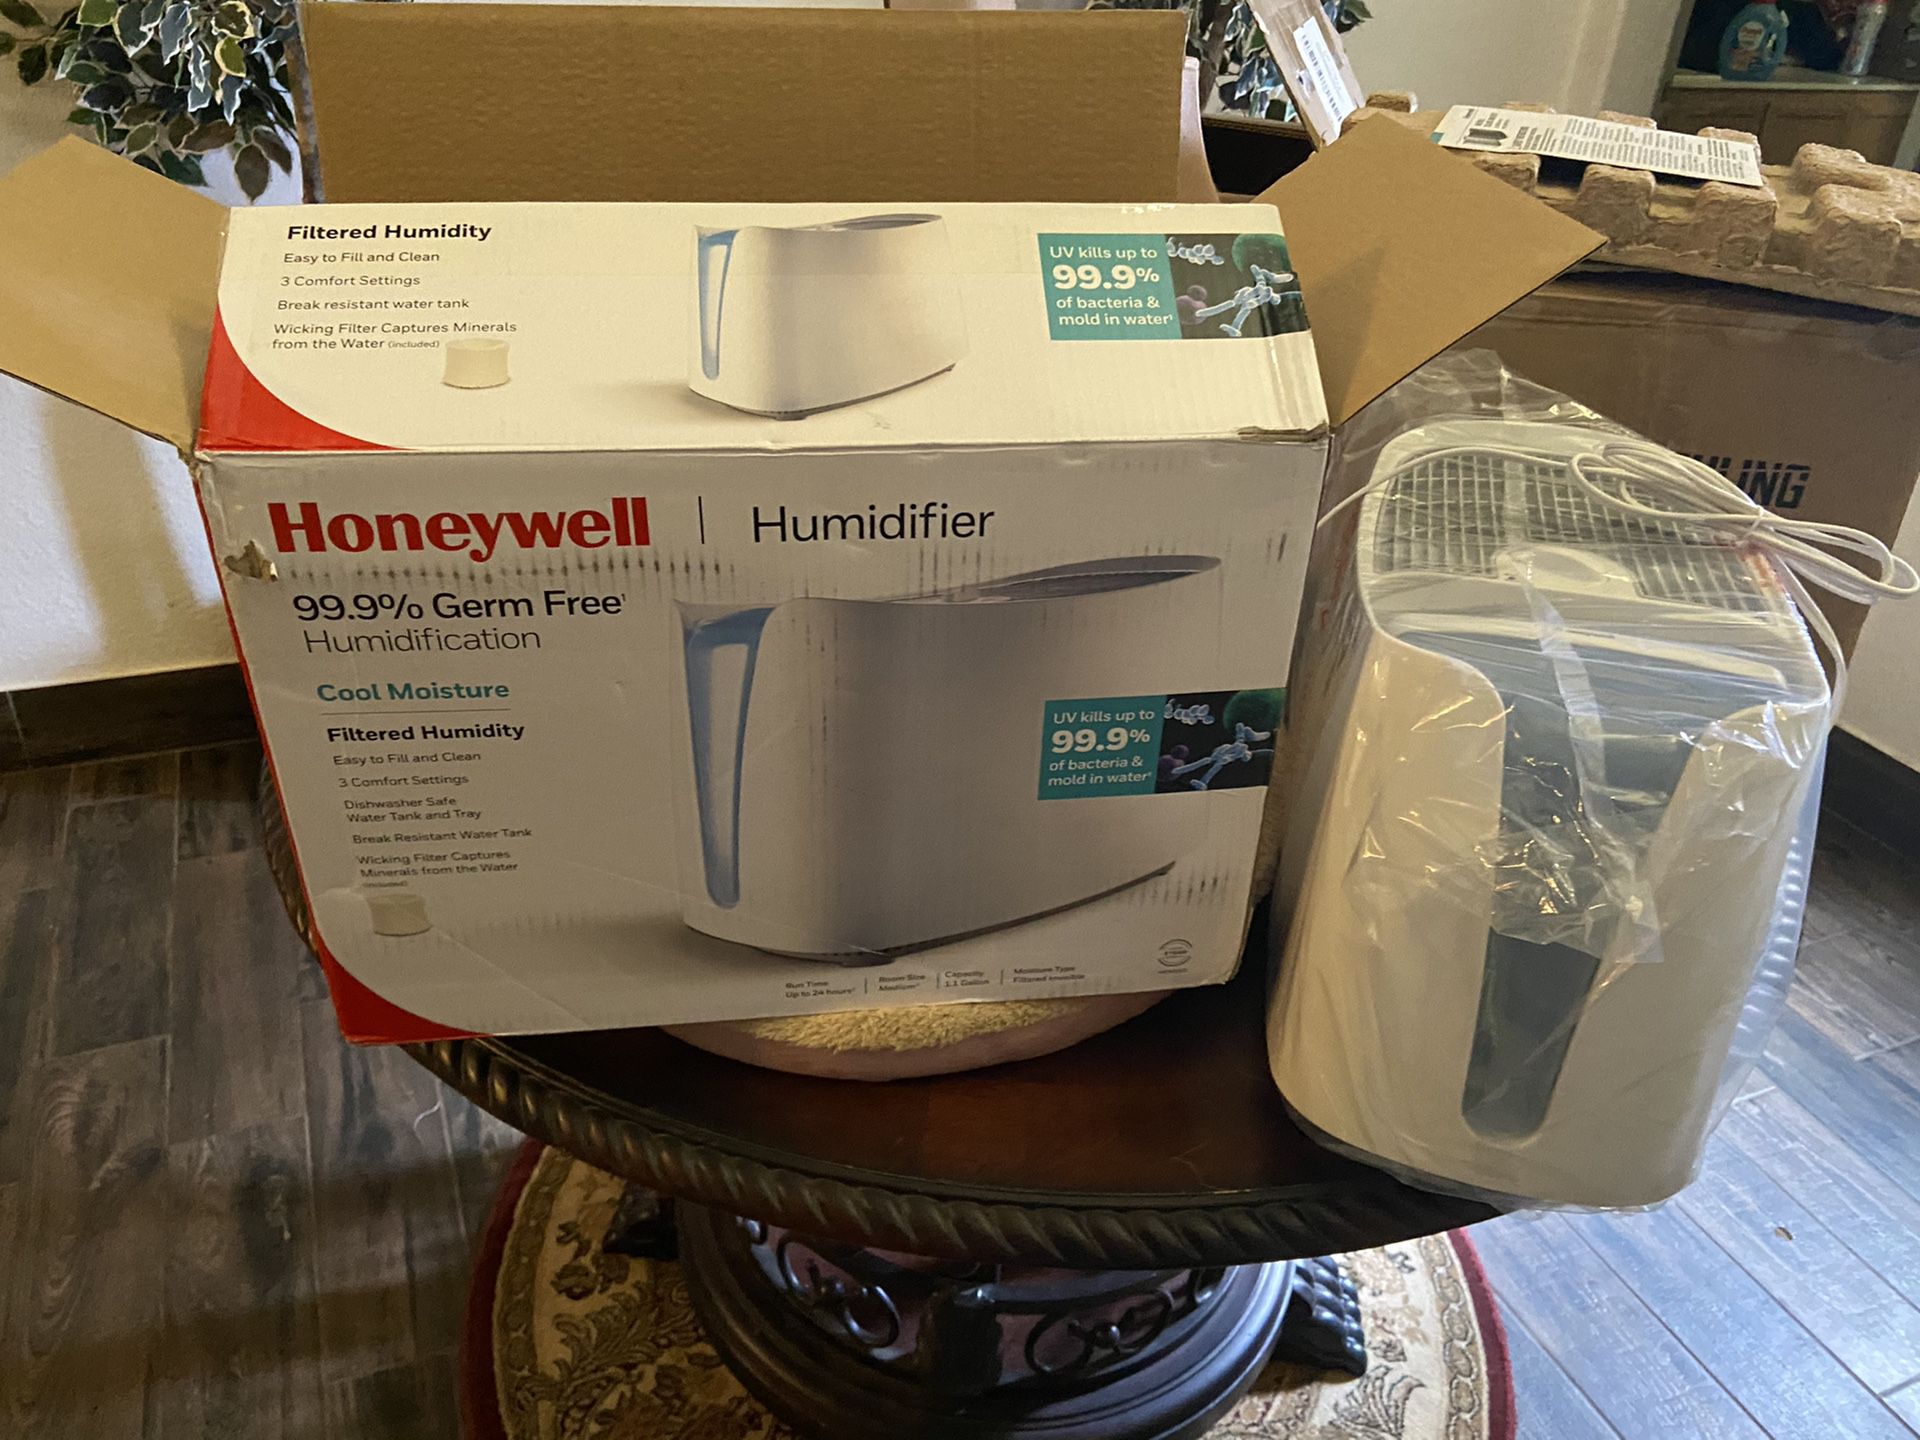 Honeywell cool moisture humidifier